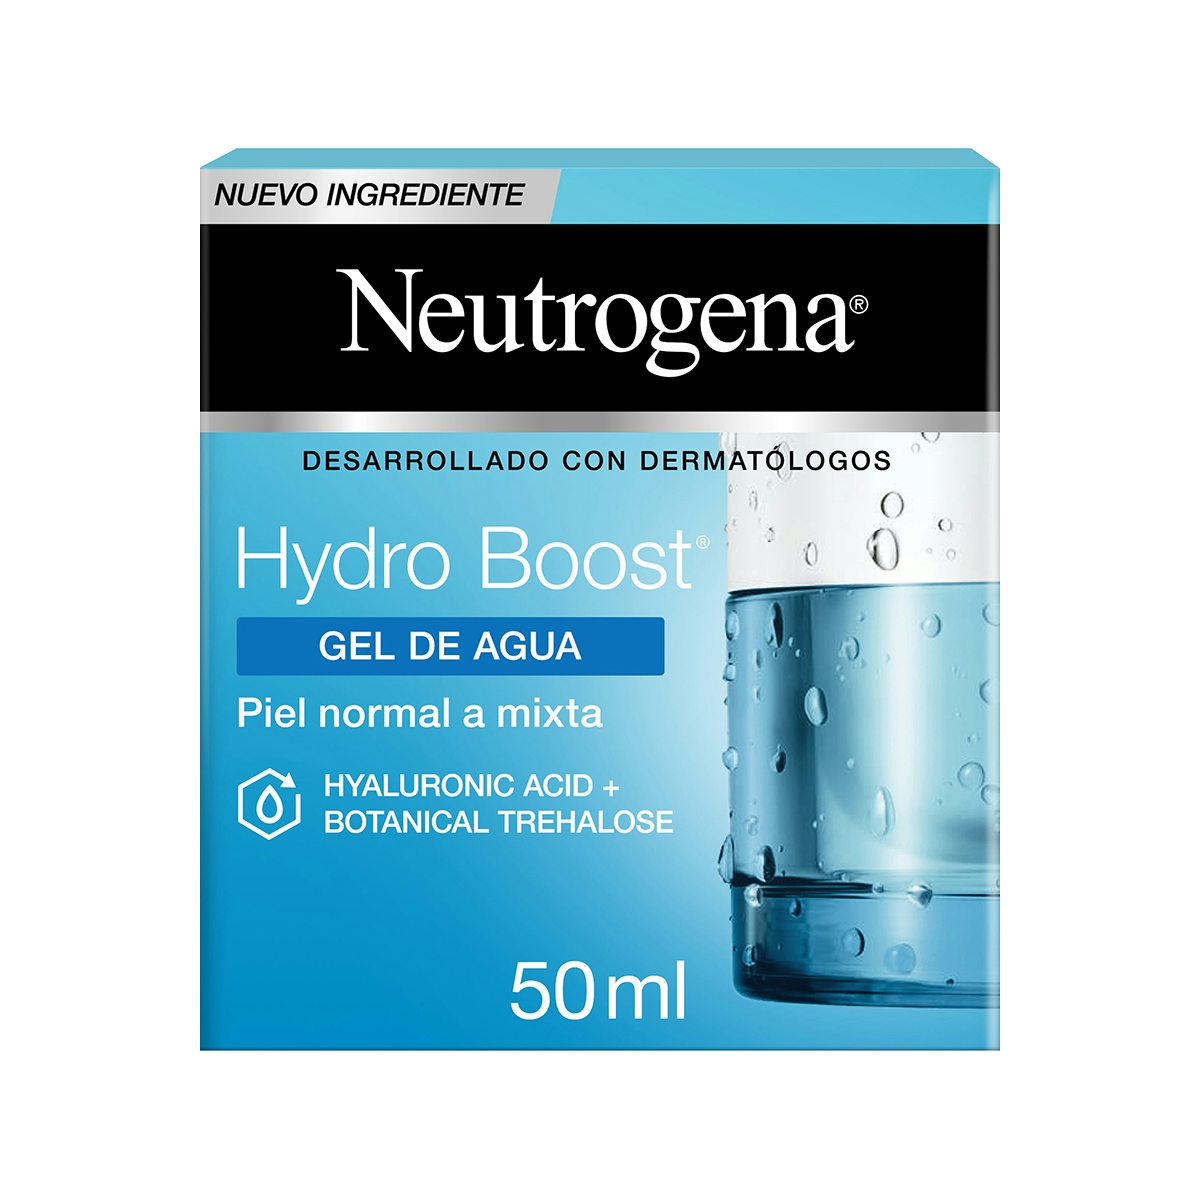 Gel de Agua Hydro Boost Neutrogena 50ml